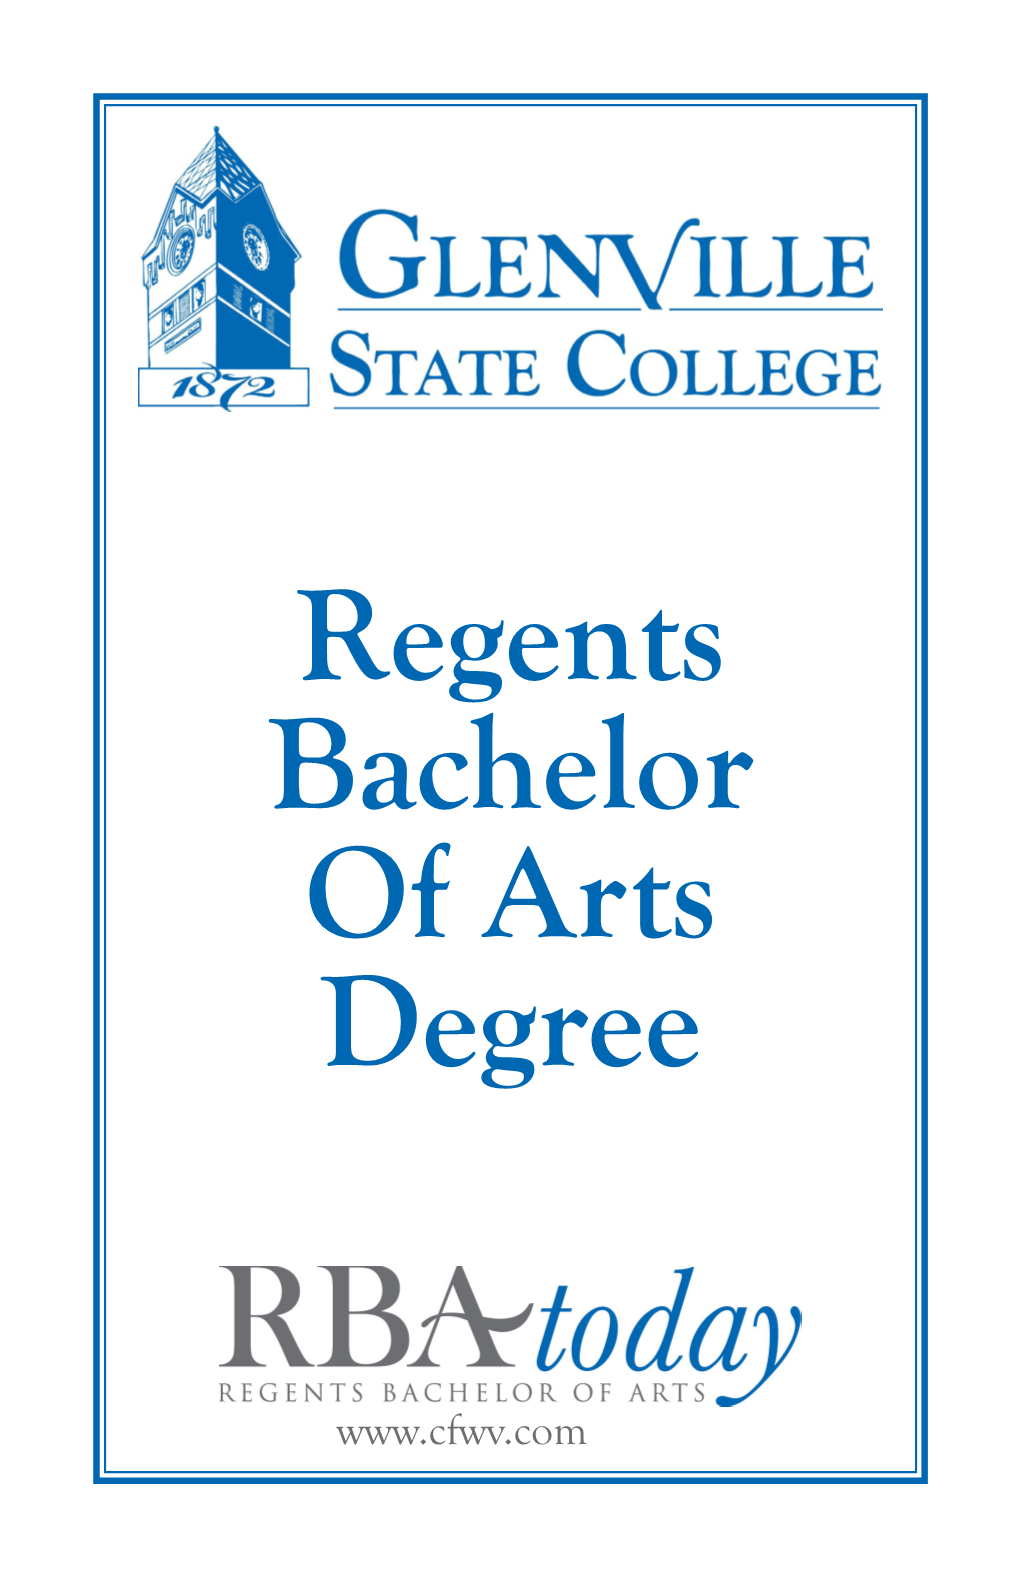 Regents Bachelor of Arts Degree